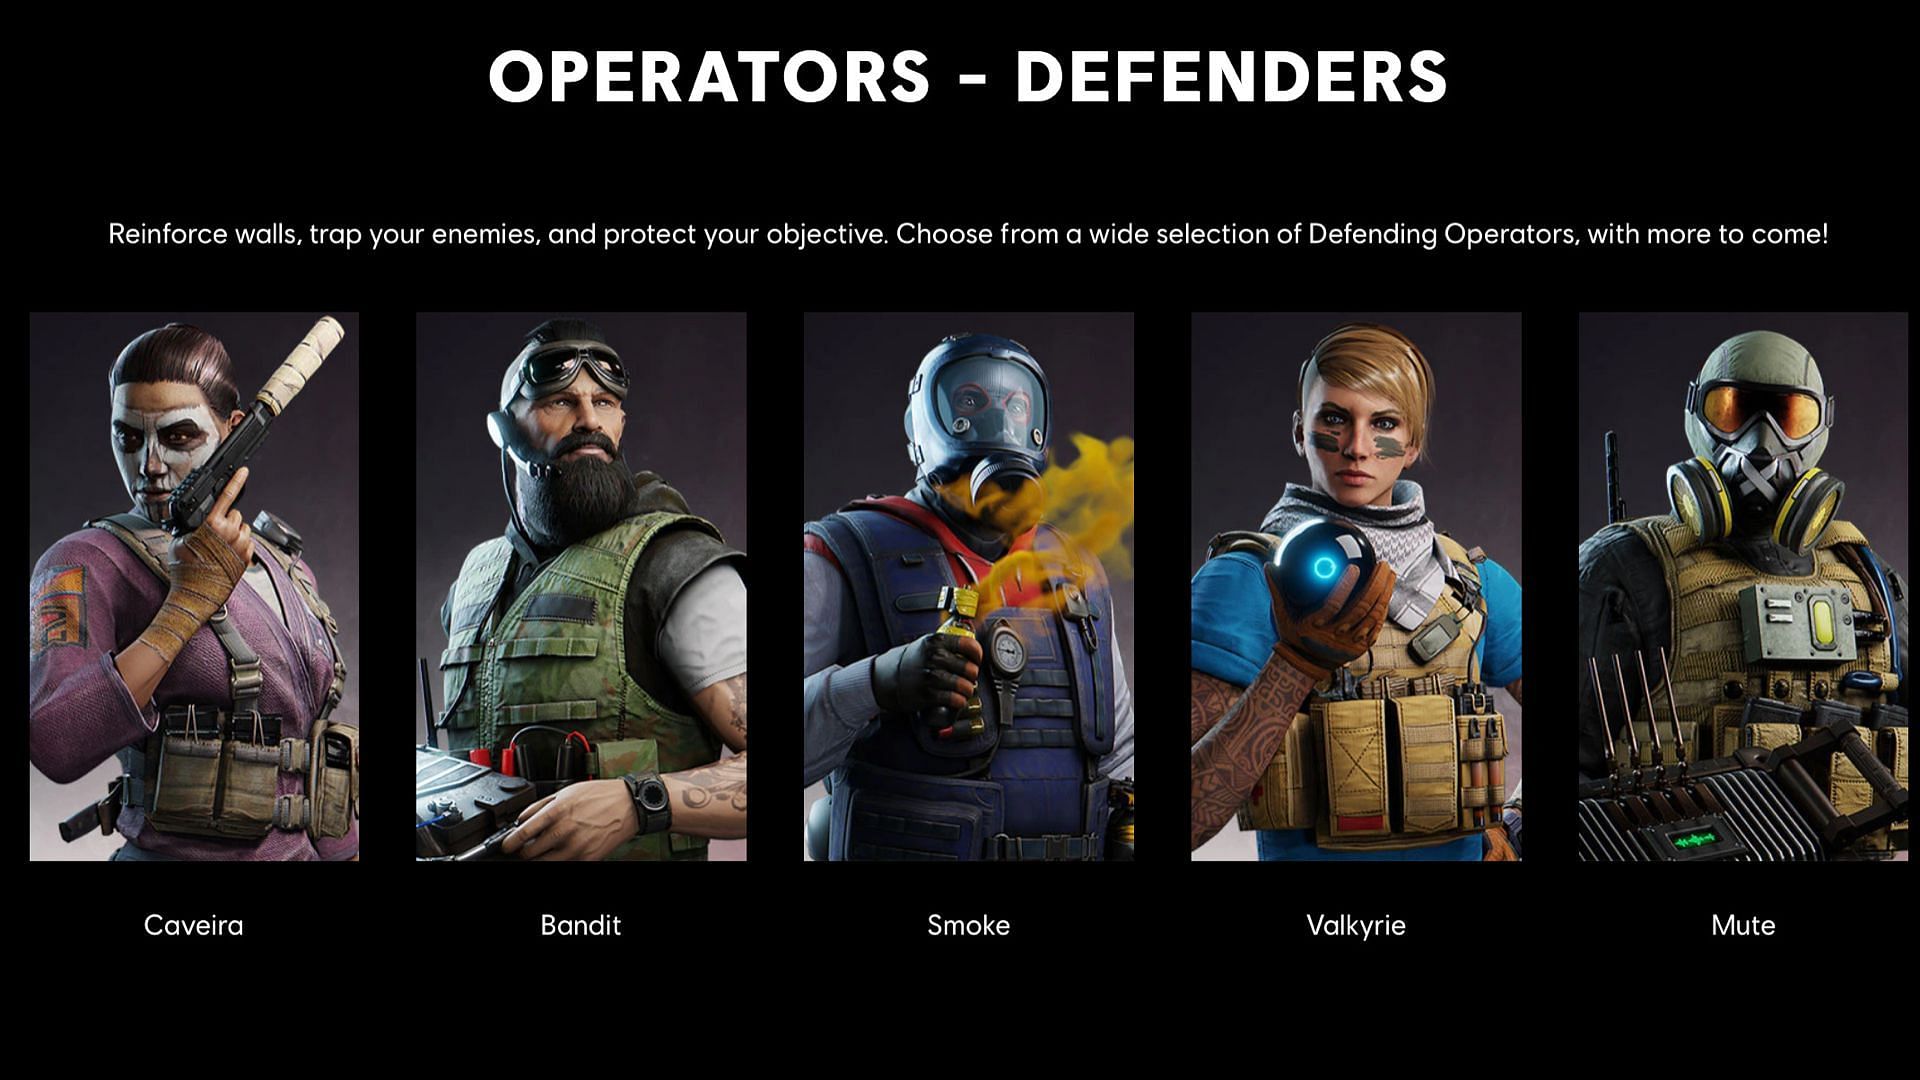 R6 Mobile Operators- Defenders (Image via Ubisoft website)